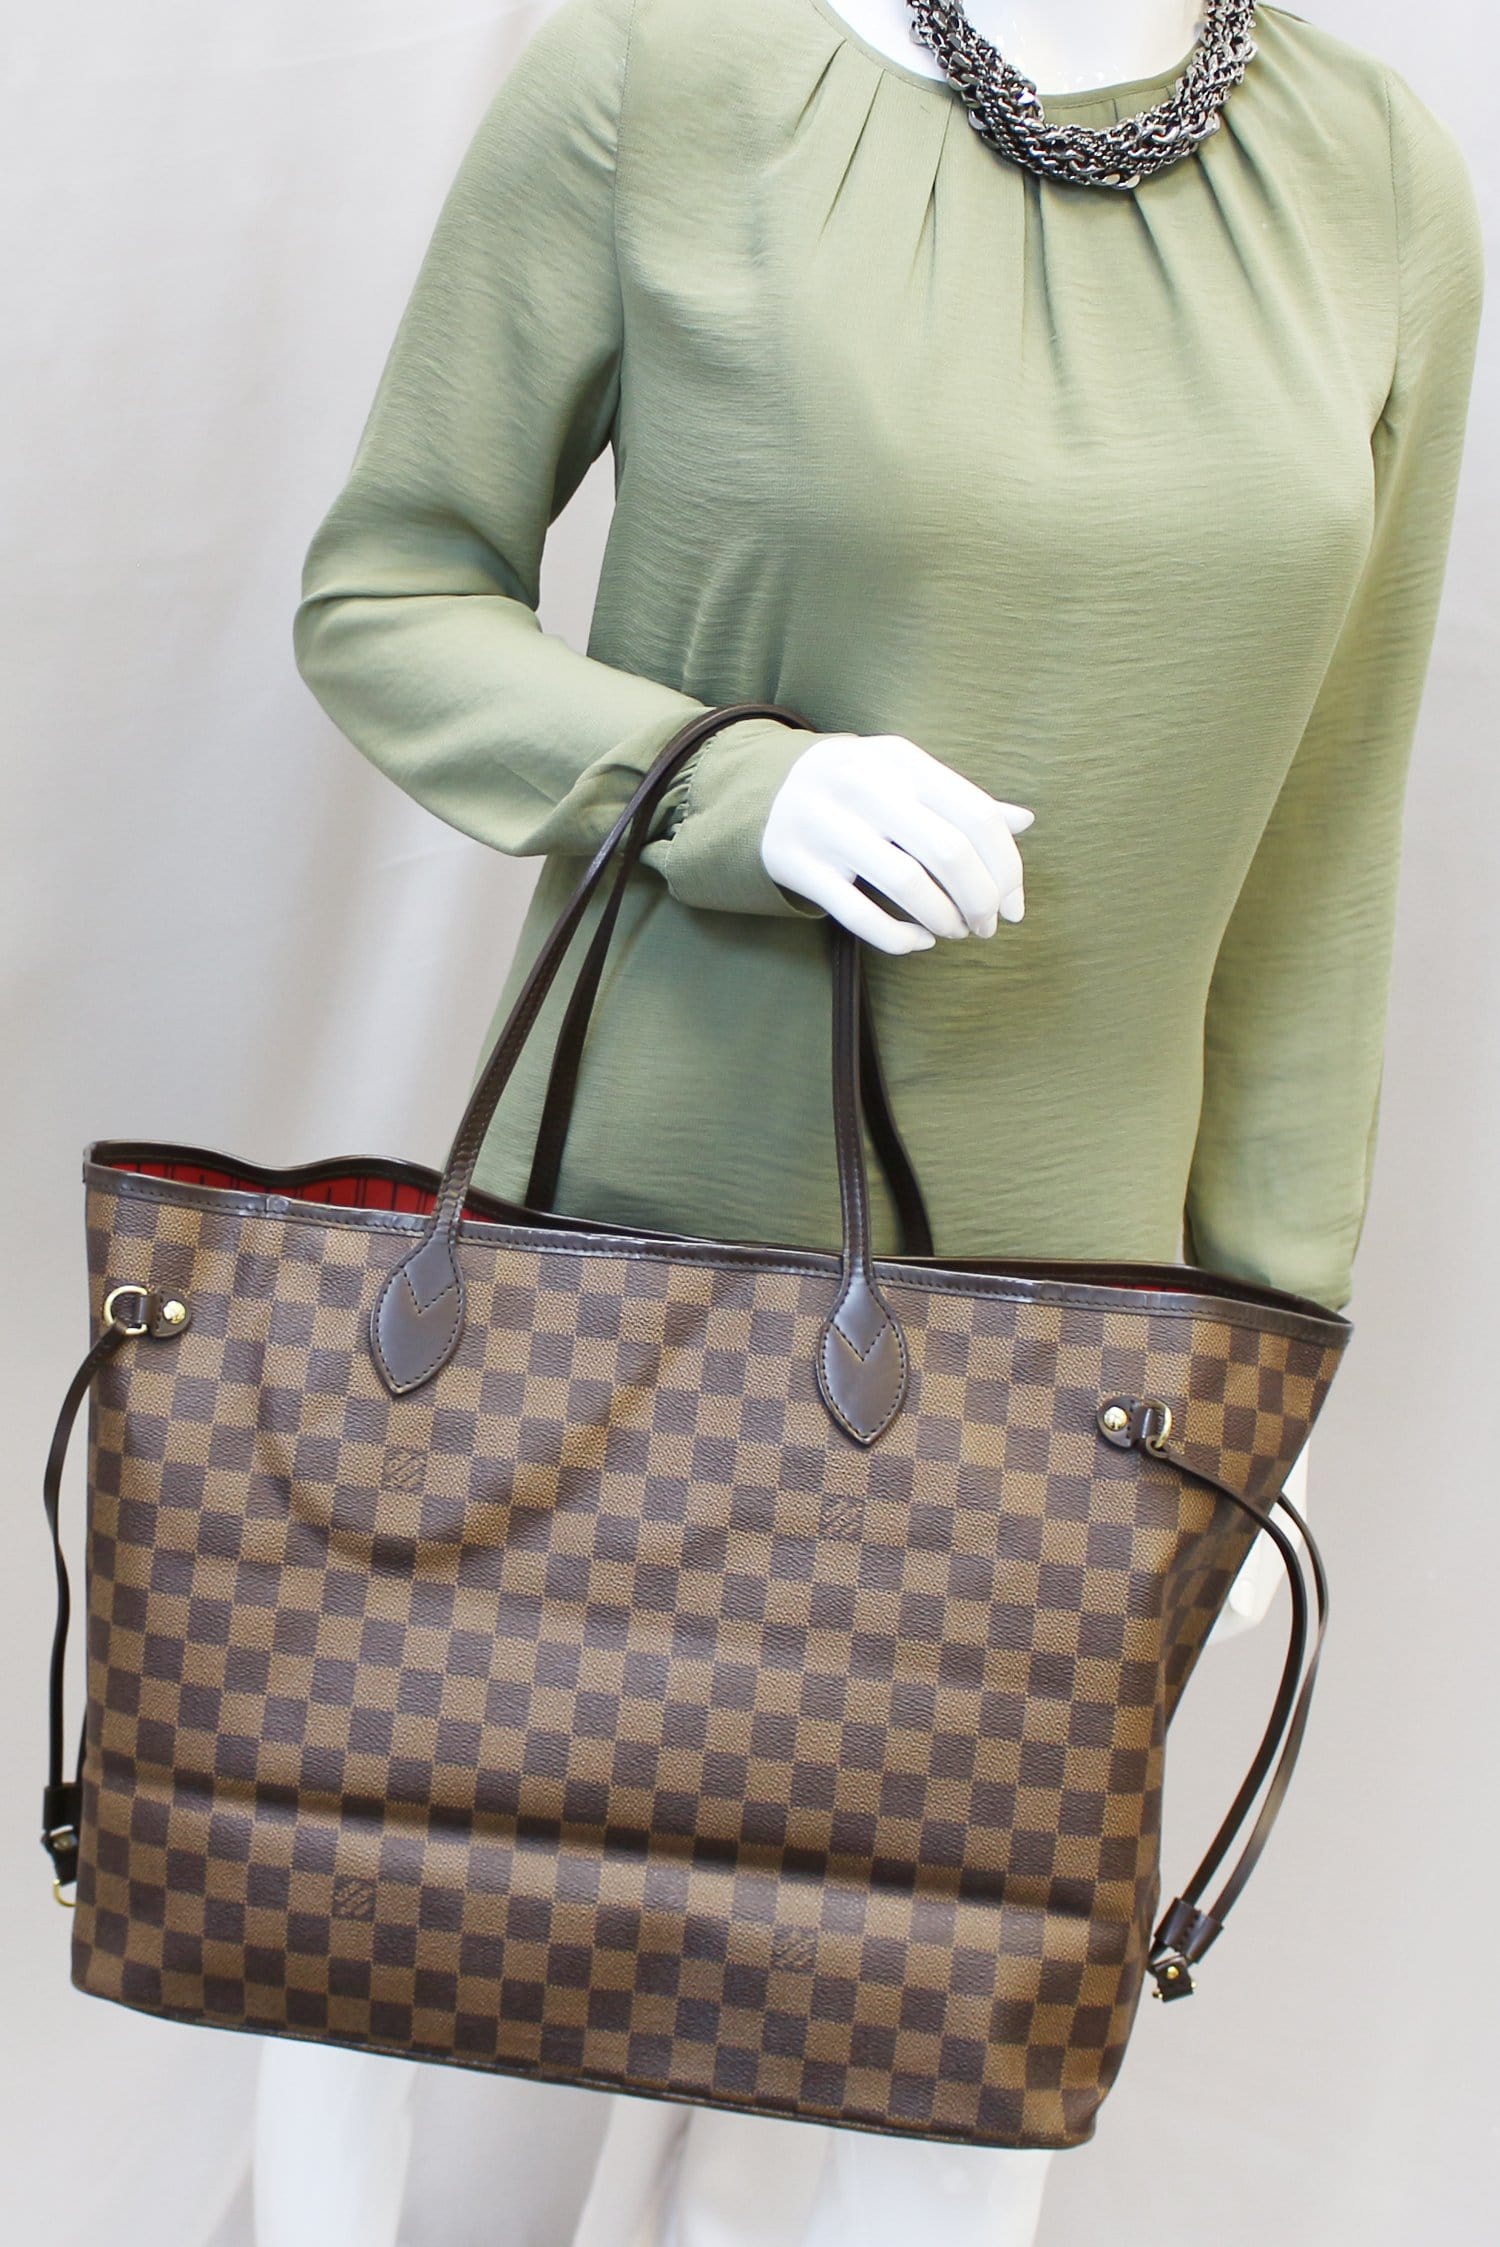 Louis Vuitton Damier Ebene Neverfull GM Tote Bag 53lk518s For Sale